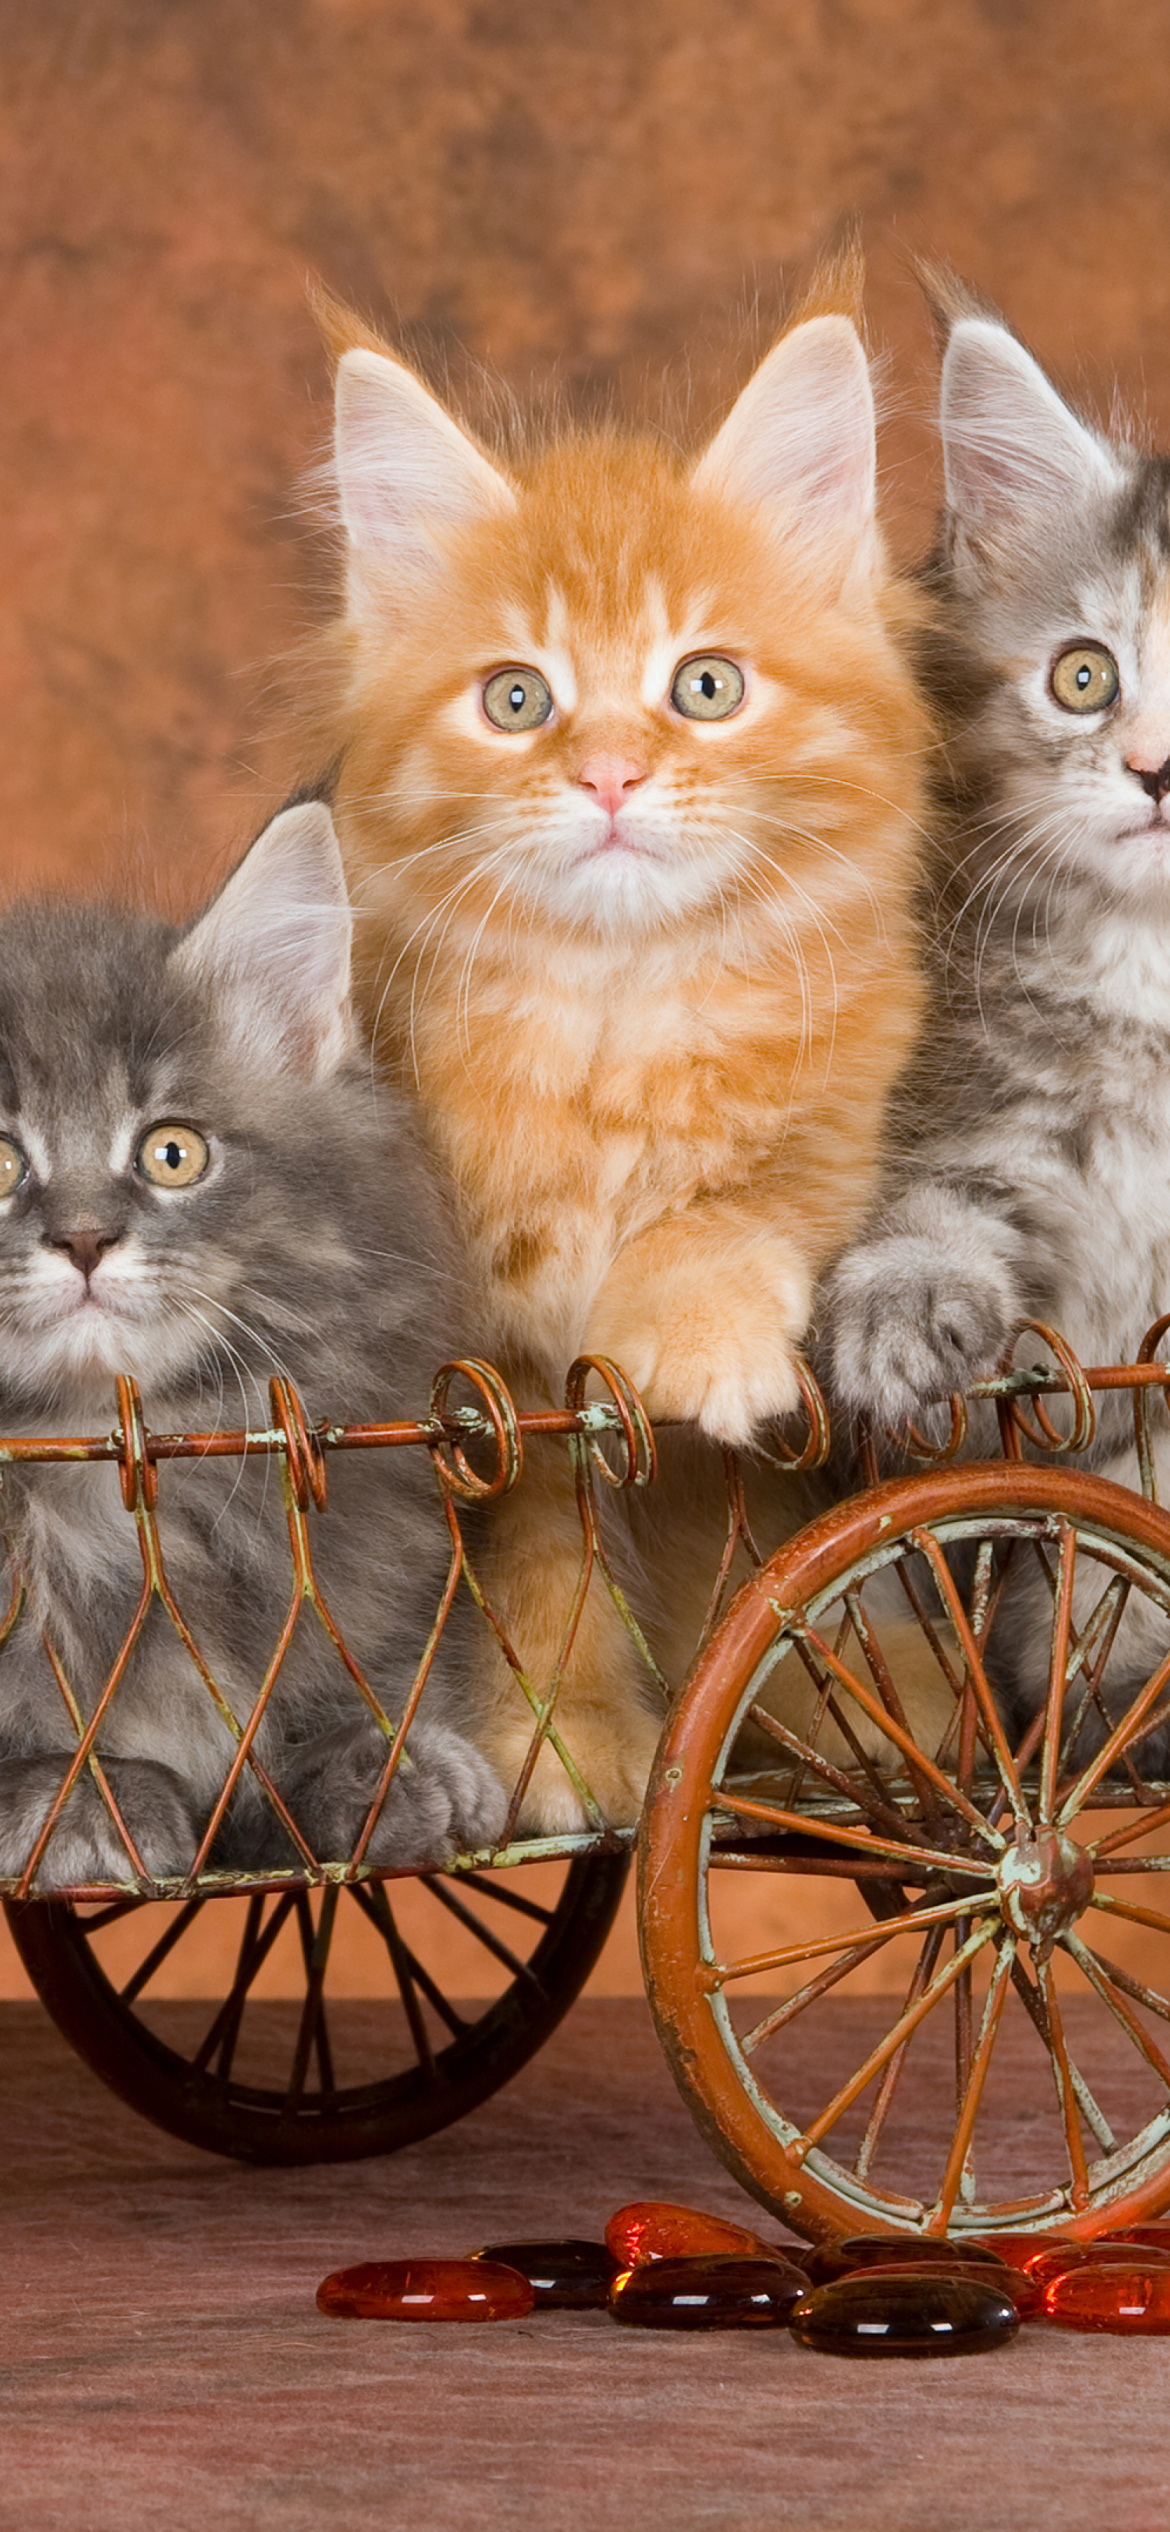 Young Kittens wallpaper 1170x2532